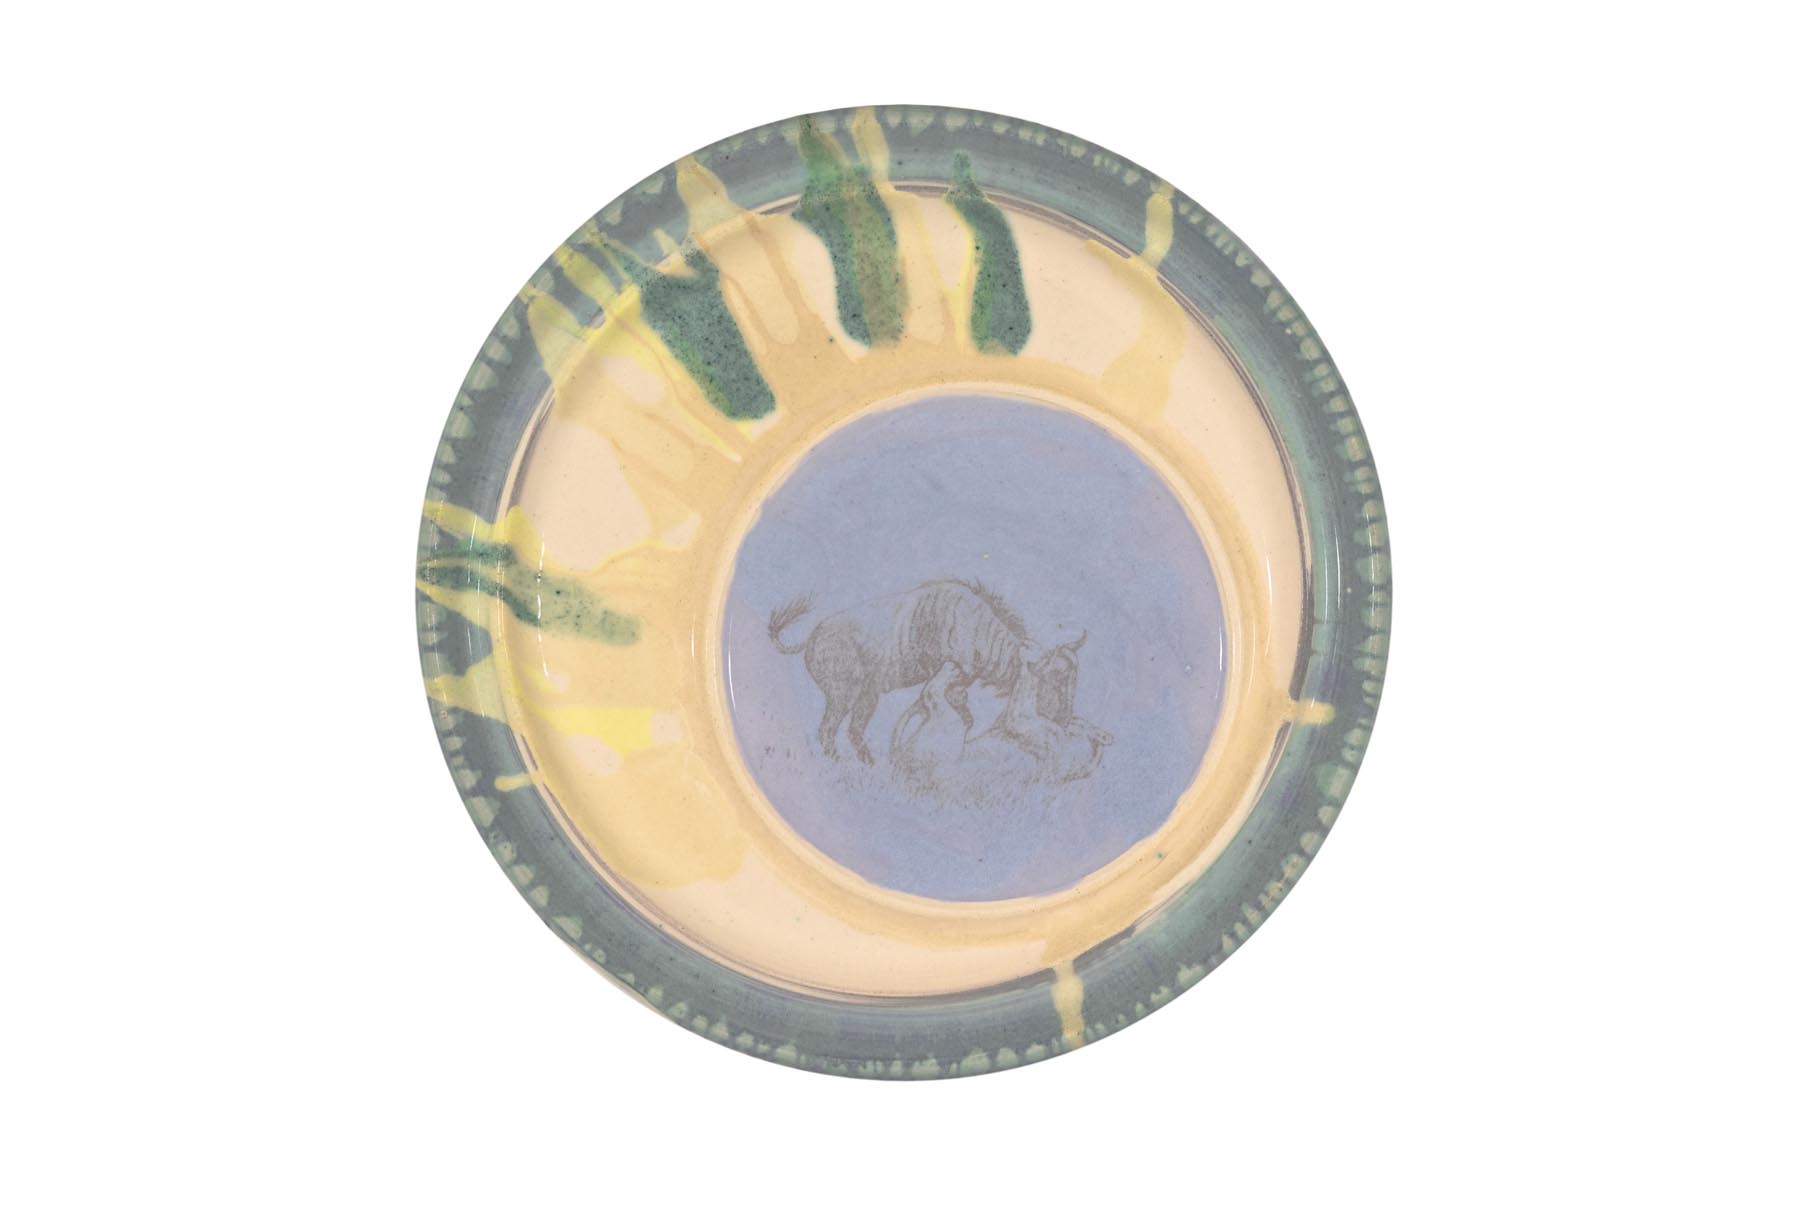      Muzzle bite   2002   slip decorated earthenware with photoceramic transfer   22cm diameter x 2 cm  